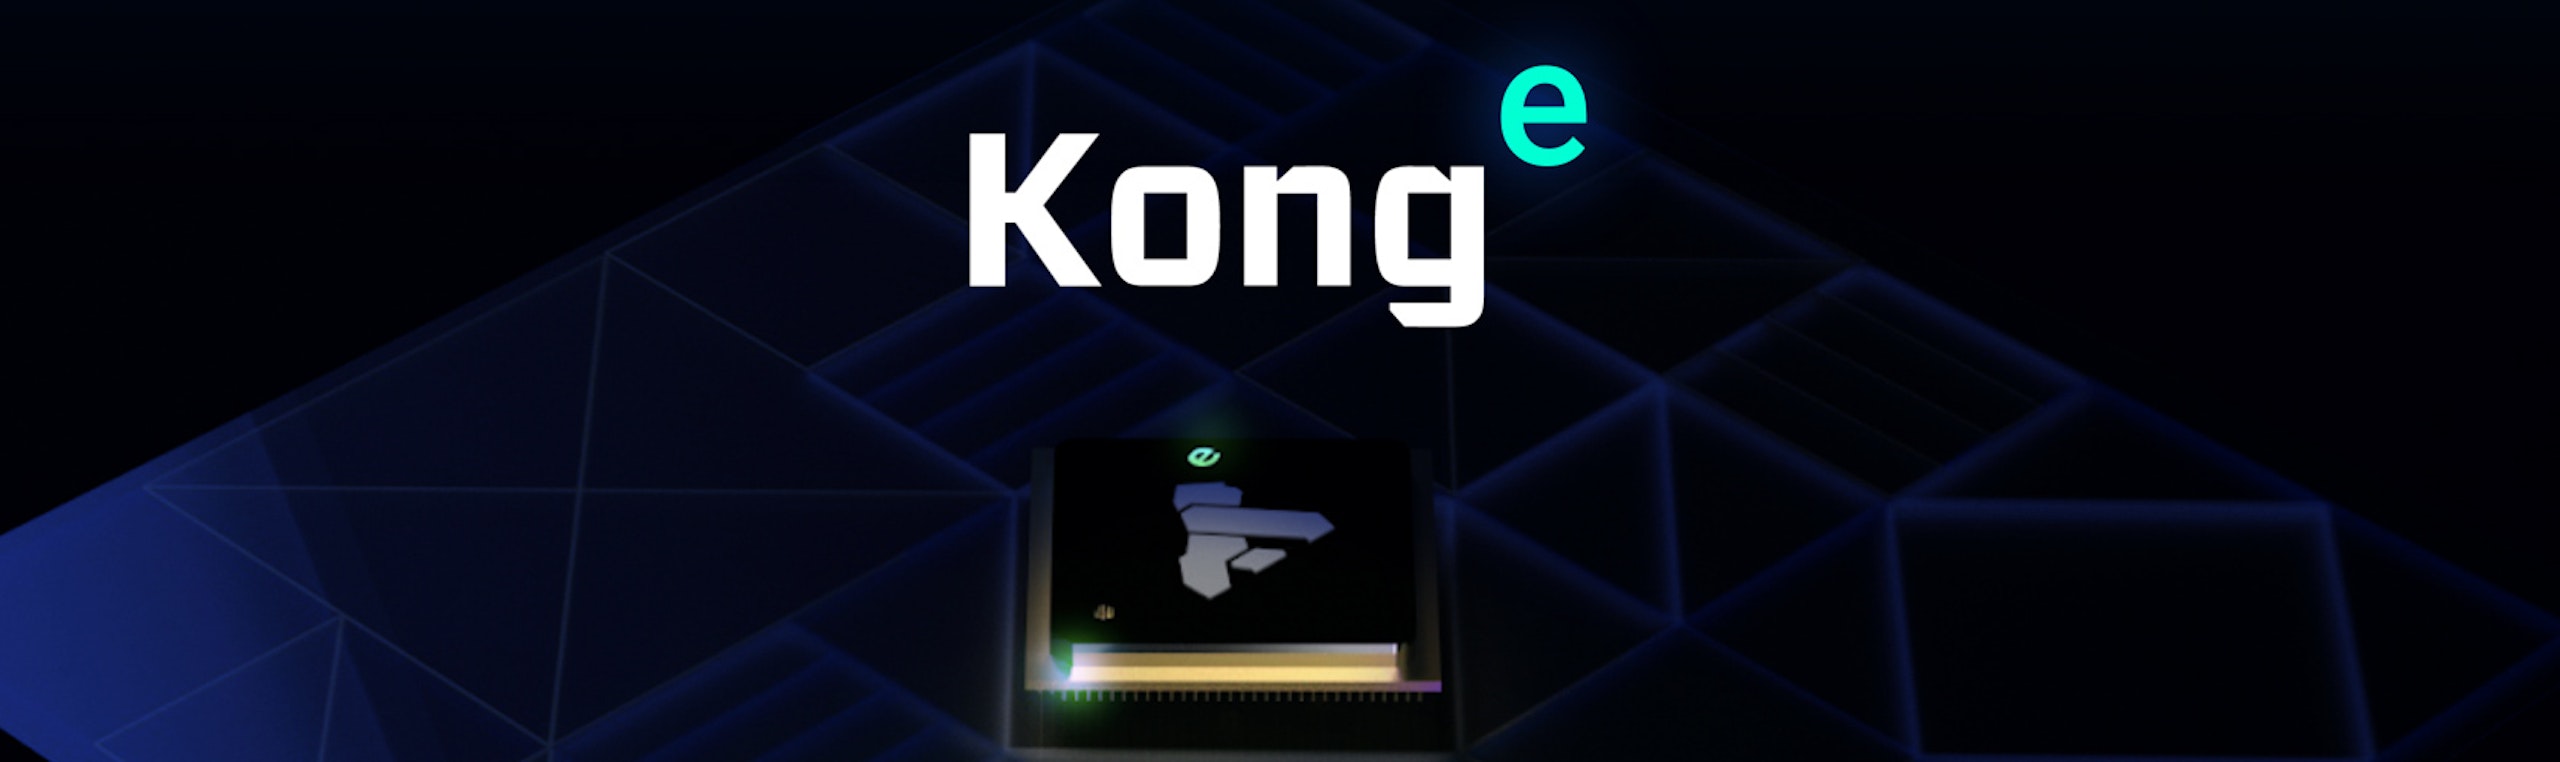 Kong Embedded